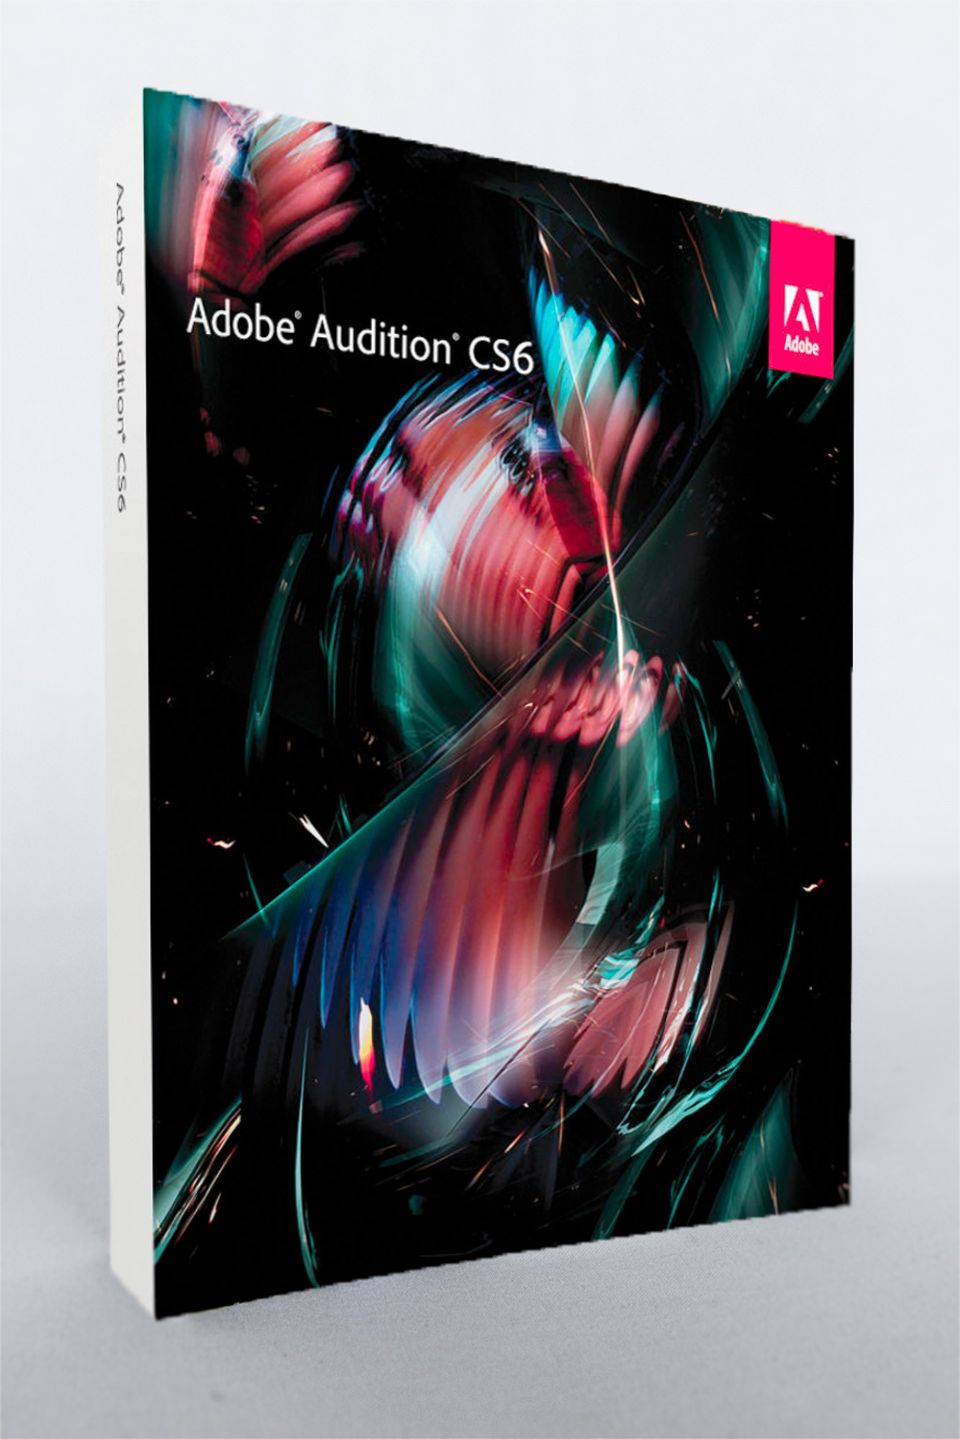 Adobe CS6 Audition